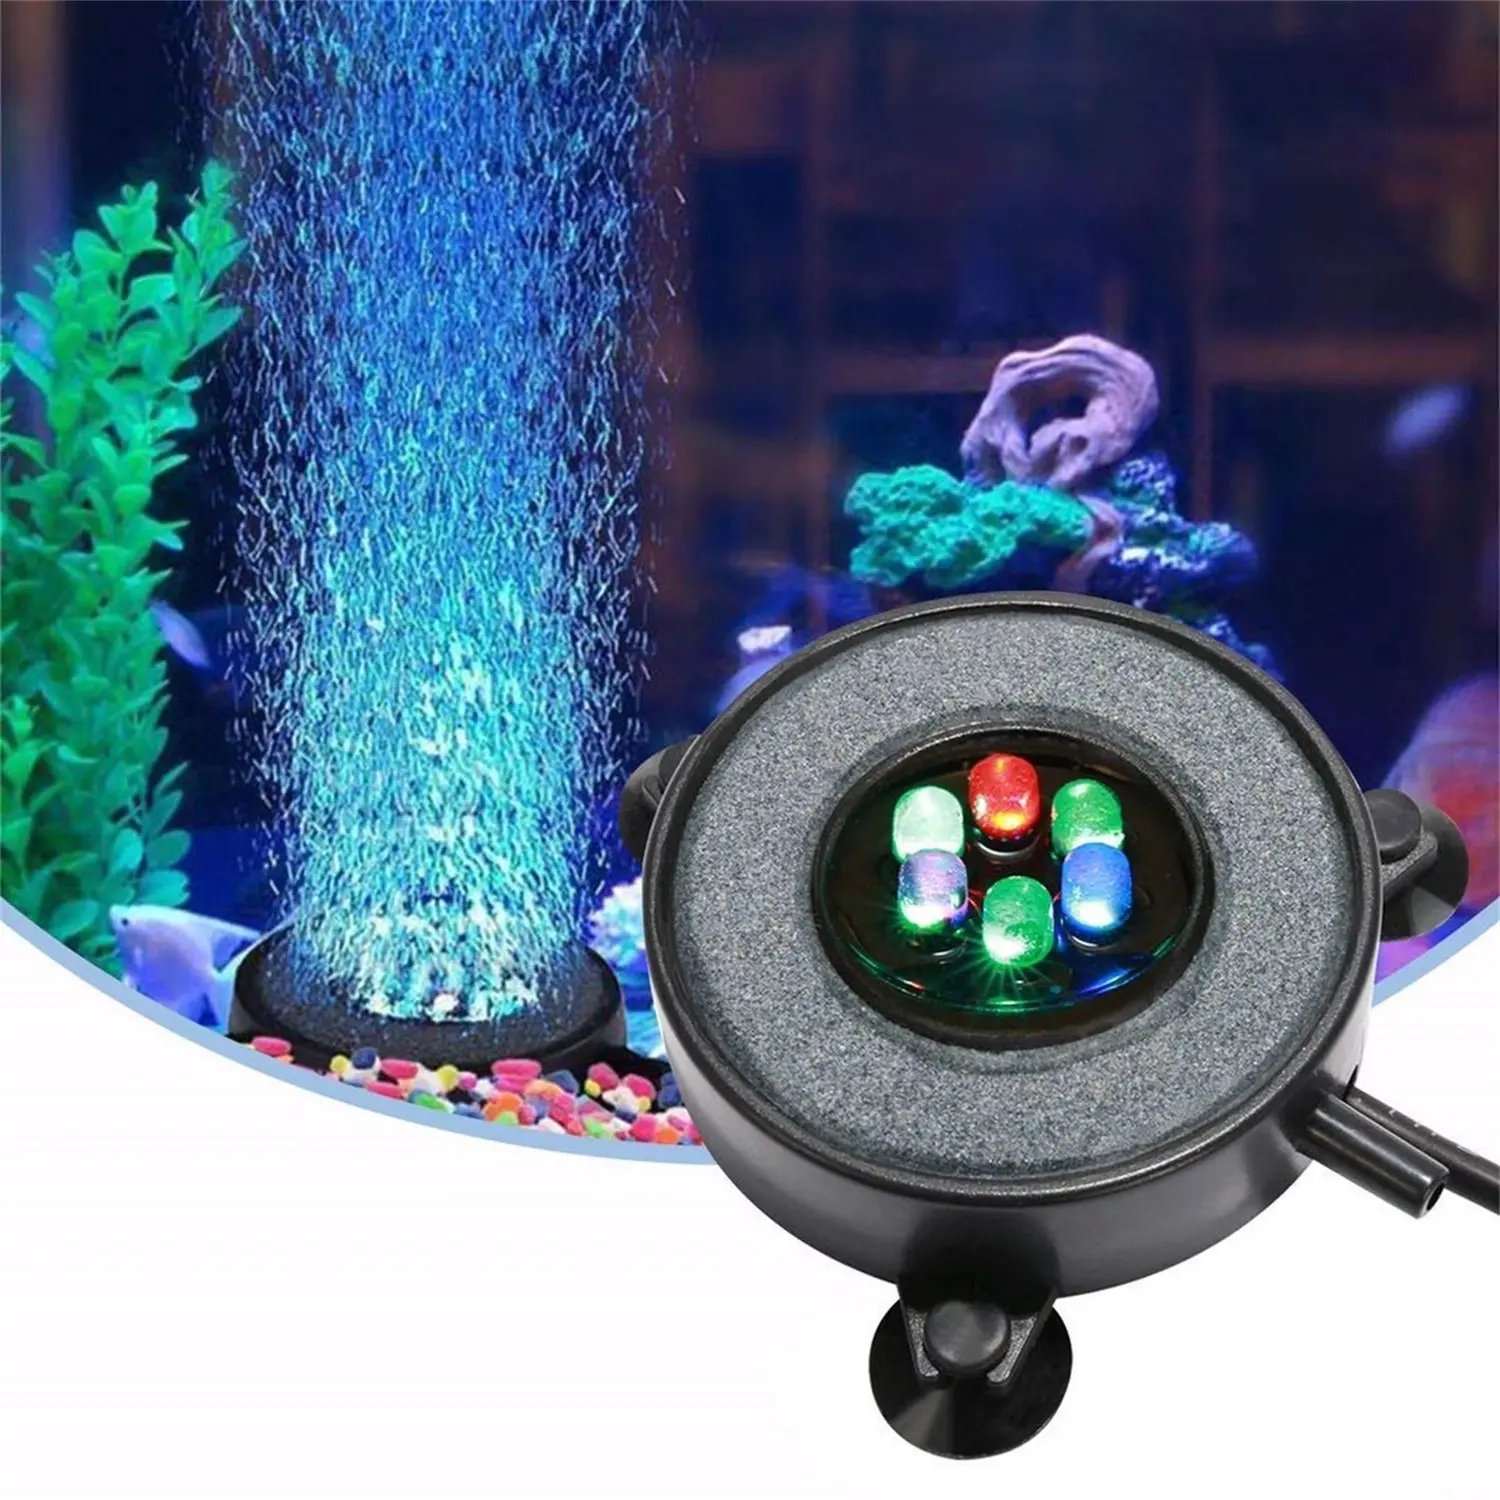 8 W RGB ضوء حوض السمك IP68 مقاوم للماء تغيير لون حوض الأسماك أضواء متعددة الألوان بقيادة مصباح فقاعة تحت الماء